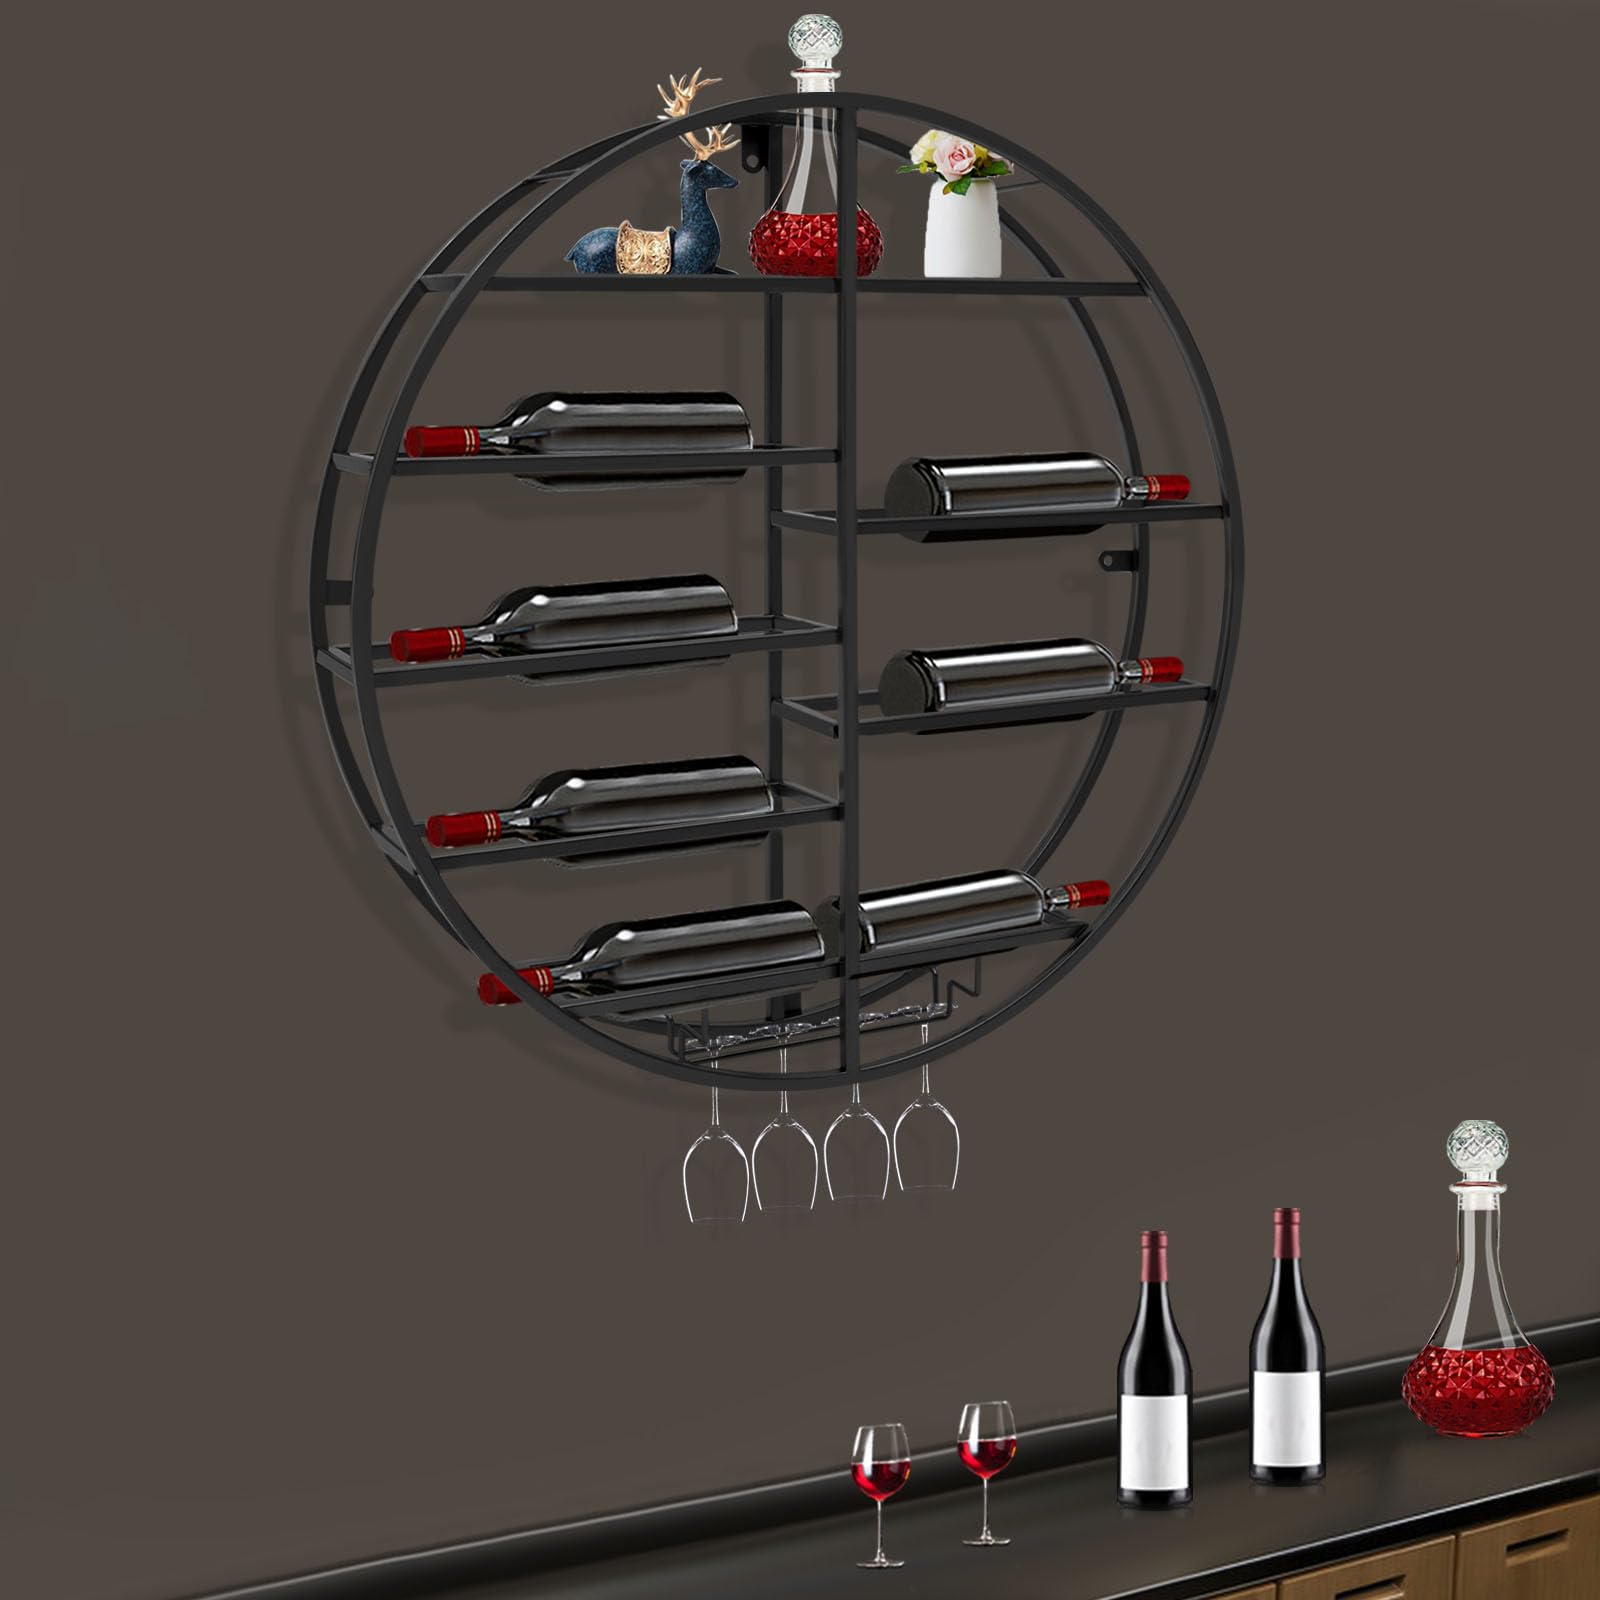 Headery Modern 23.6inch Mental Wall Mounted Wine Rack,5 Tier Stackable Wine Holder, Round Wine Glass Shelf Goblet Holder for Bar Wine Cellar Kitchen Storage Display (Gold/Black) (Black)